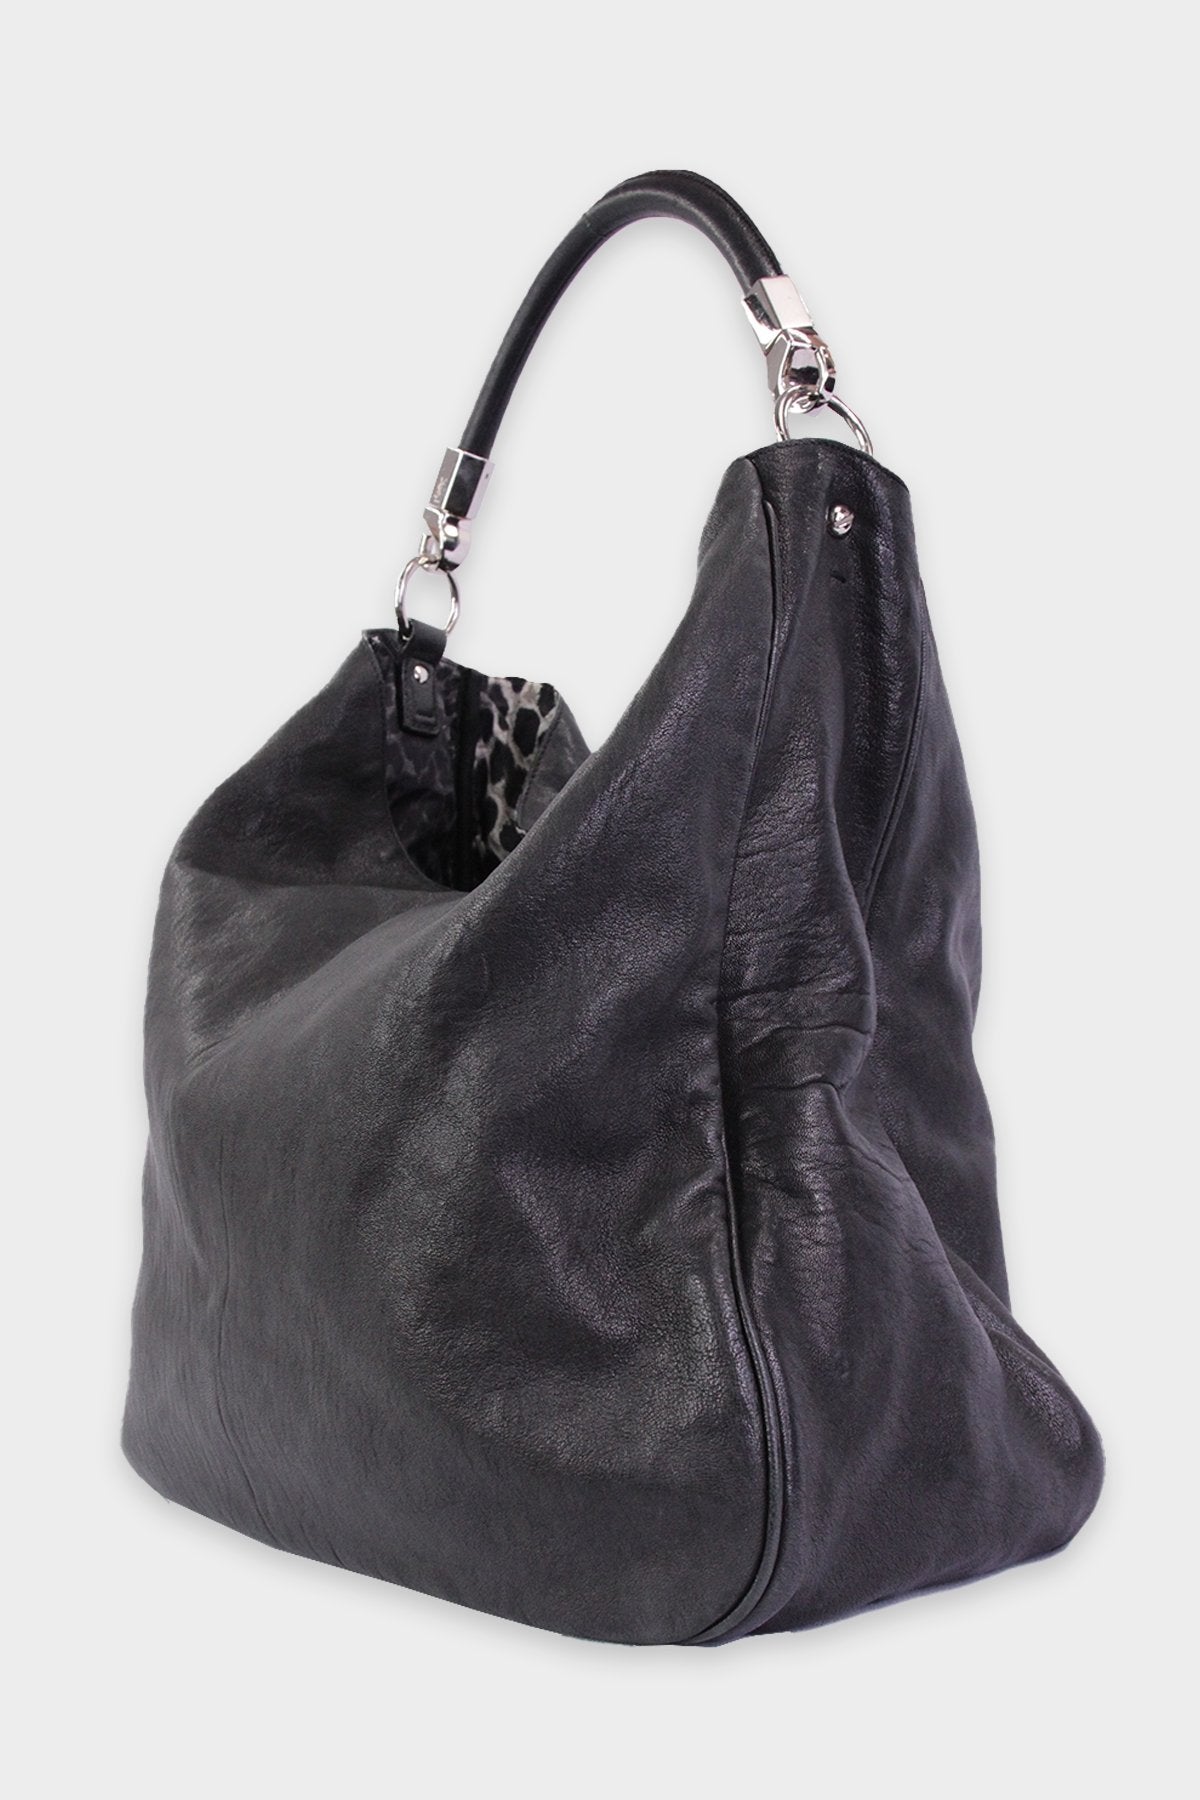 Saint Laurent Black Leather Hobo Handbag with Leopard Print in the Interior - shop-olivia.com